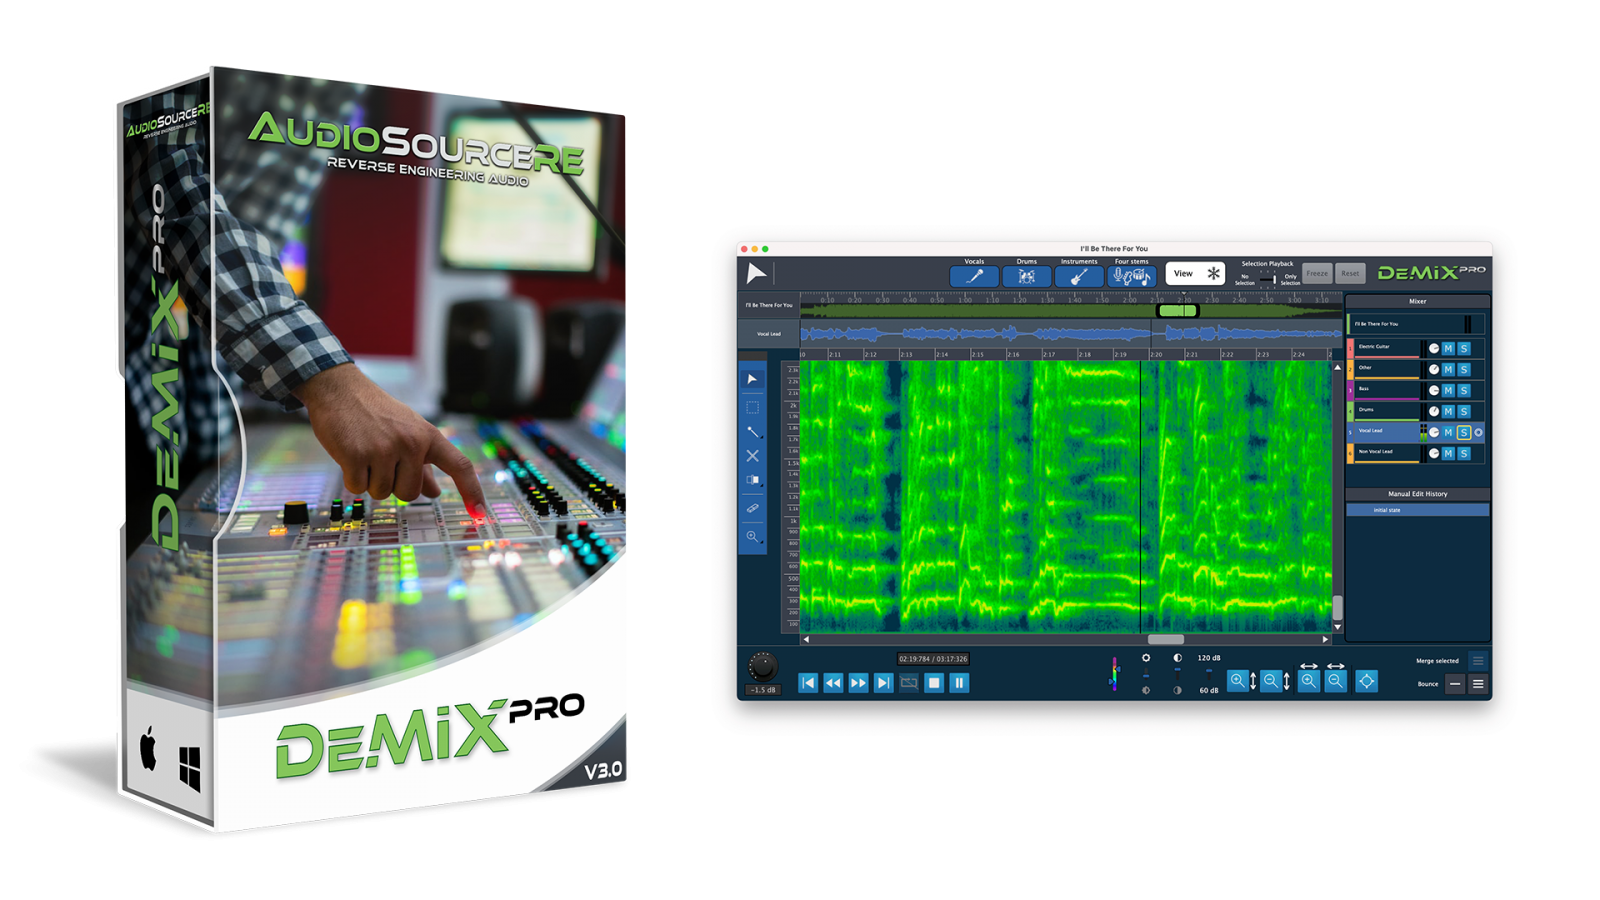 AudioSourceRE DeMIX Pro